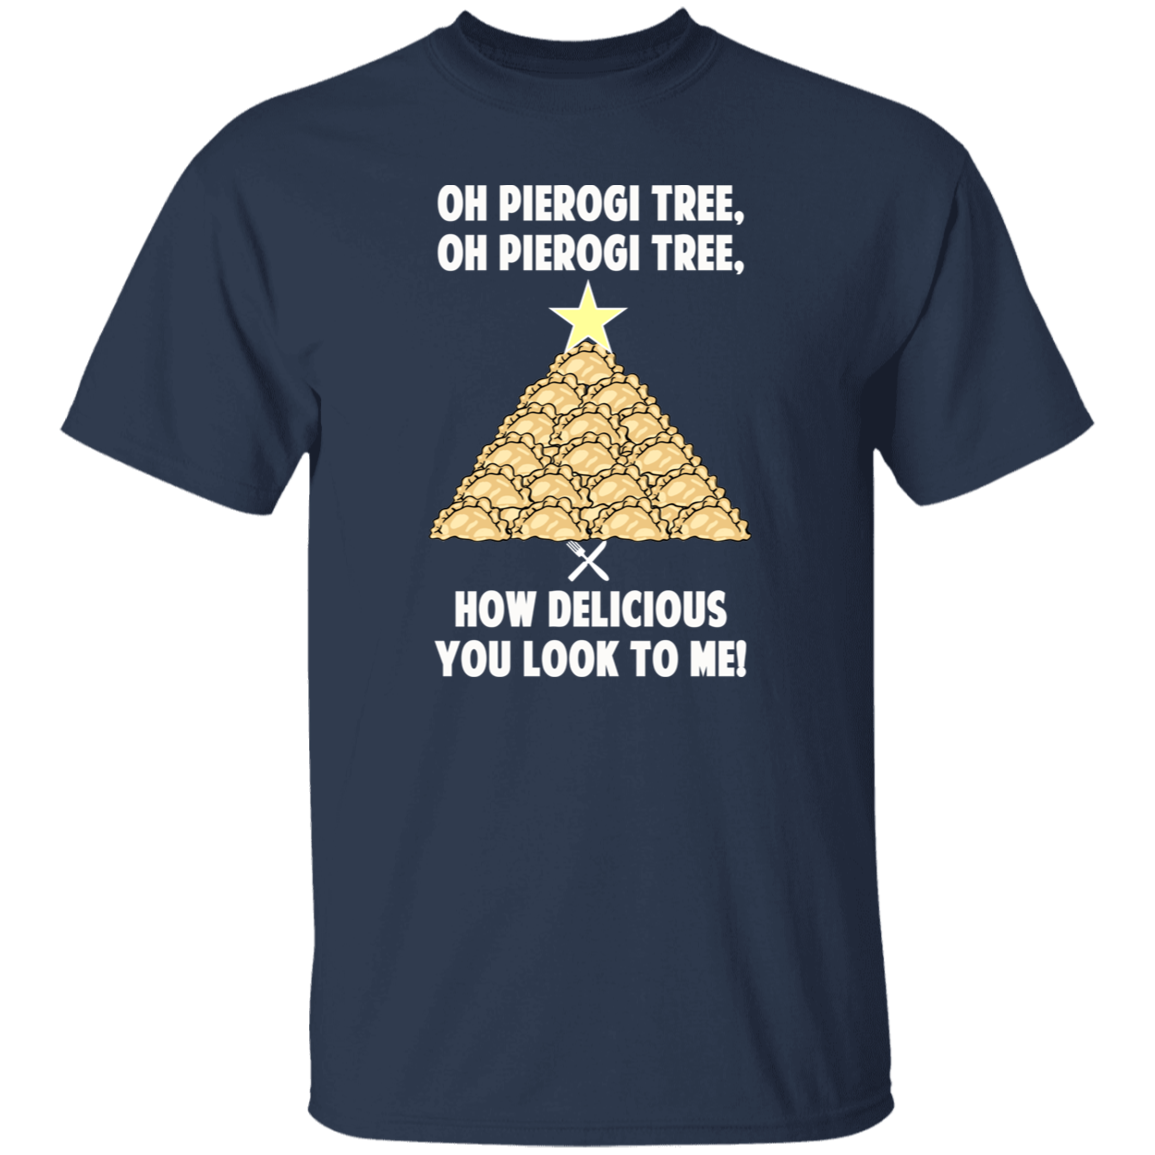 Pierogi Tree T-Shirt - The Original T-Shirts CustomCat Navy S 